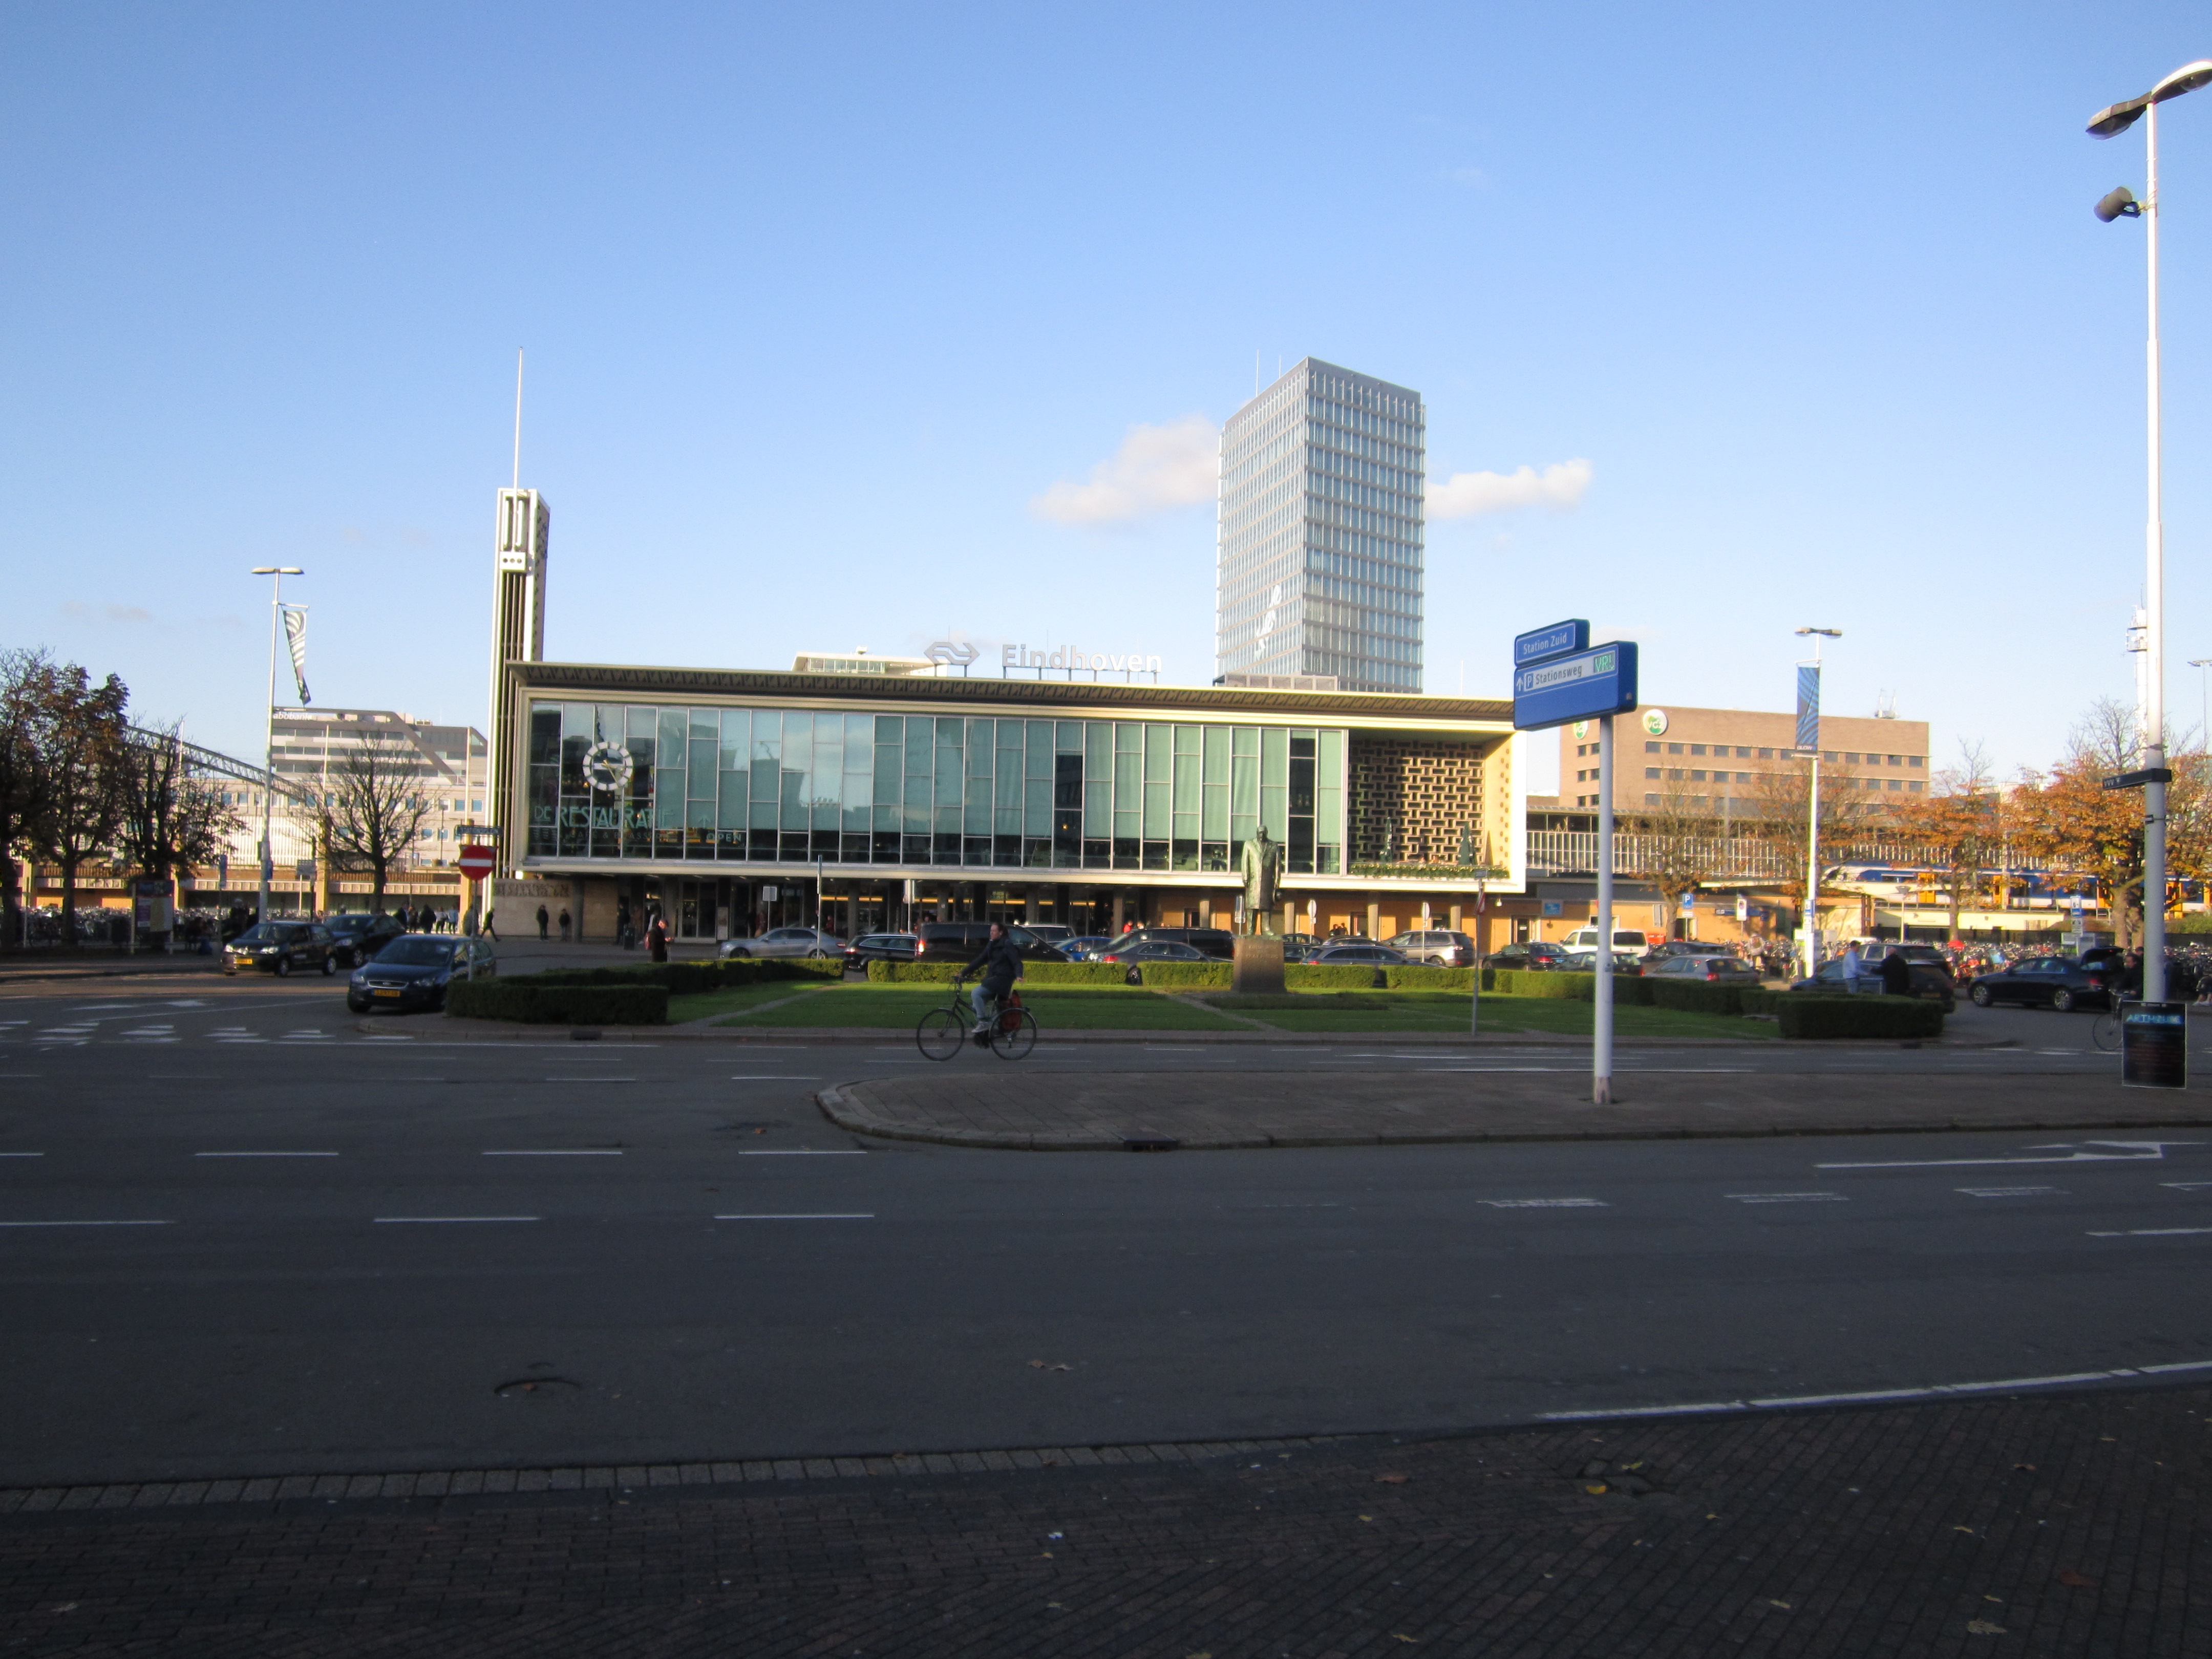 Station Eindhoven 2019